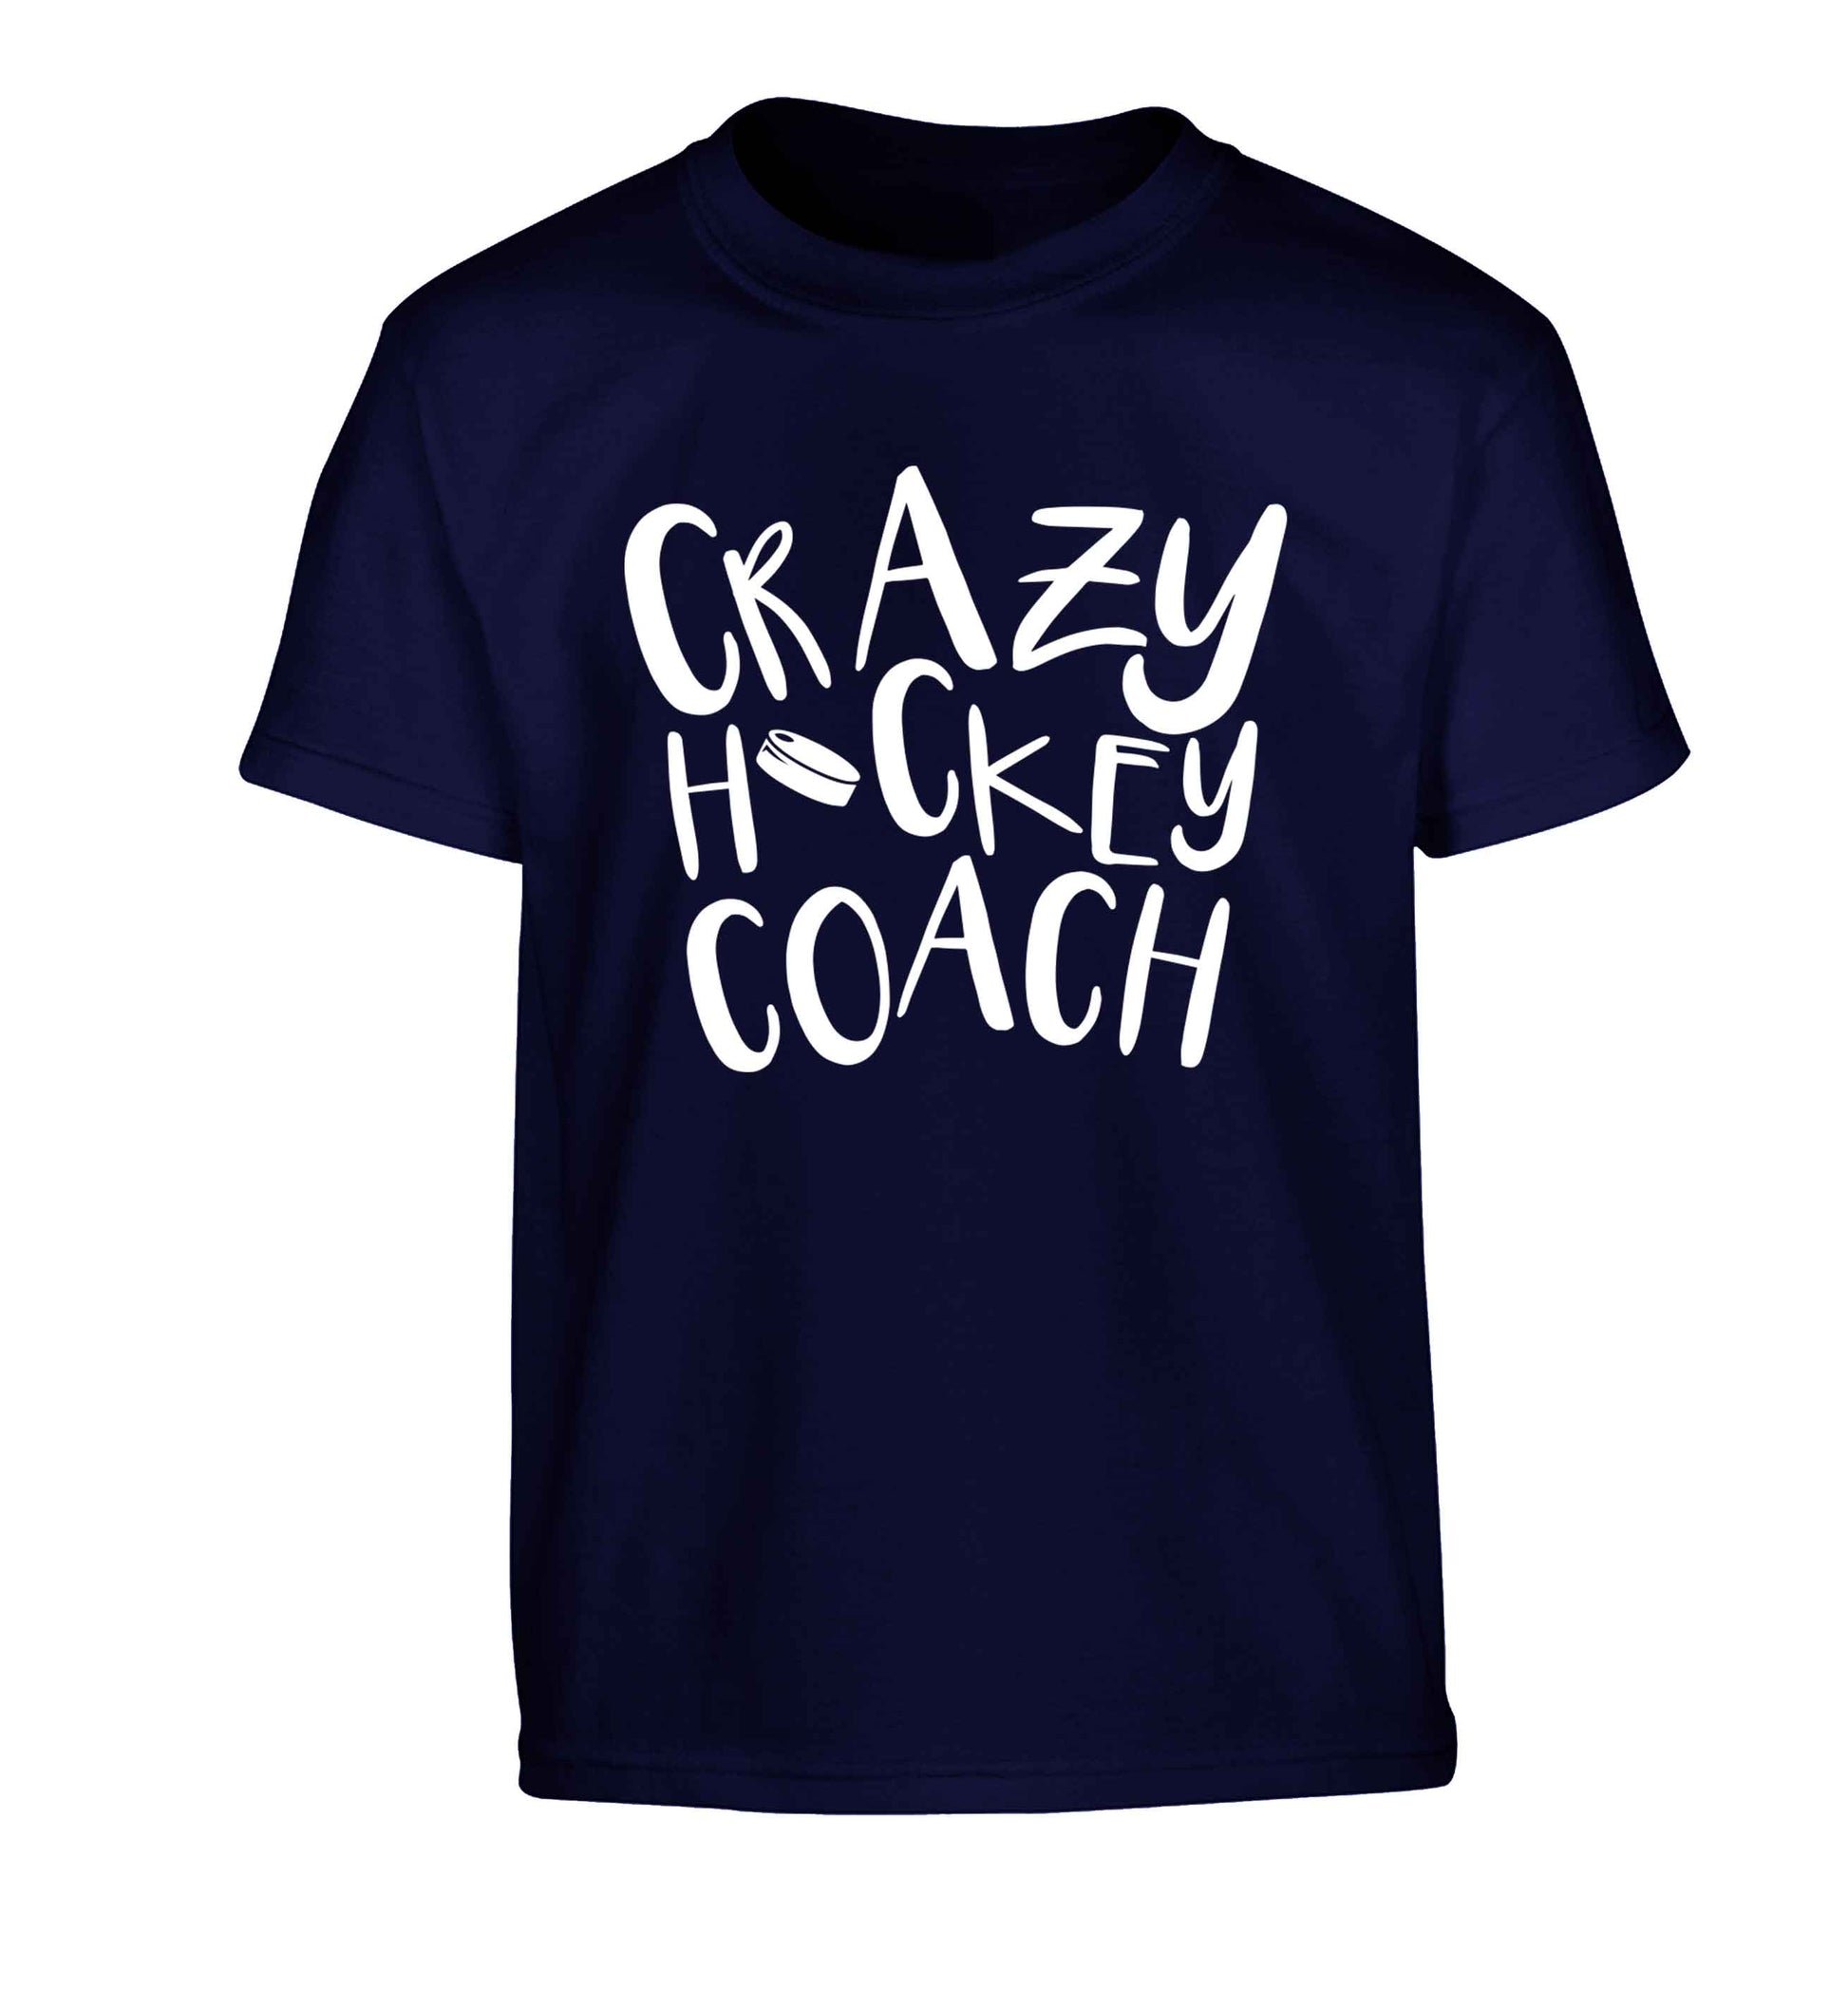 Crazy hockey coach Children's navy Tshirt 12-13 Years